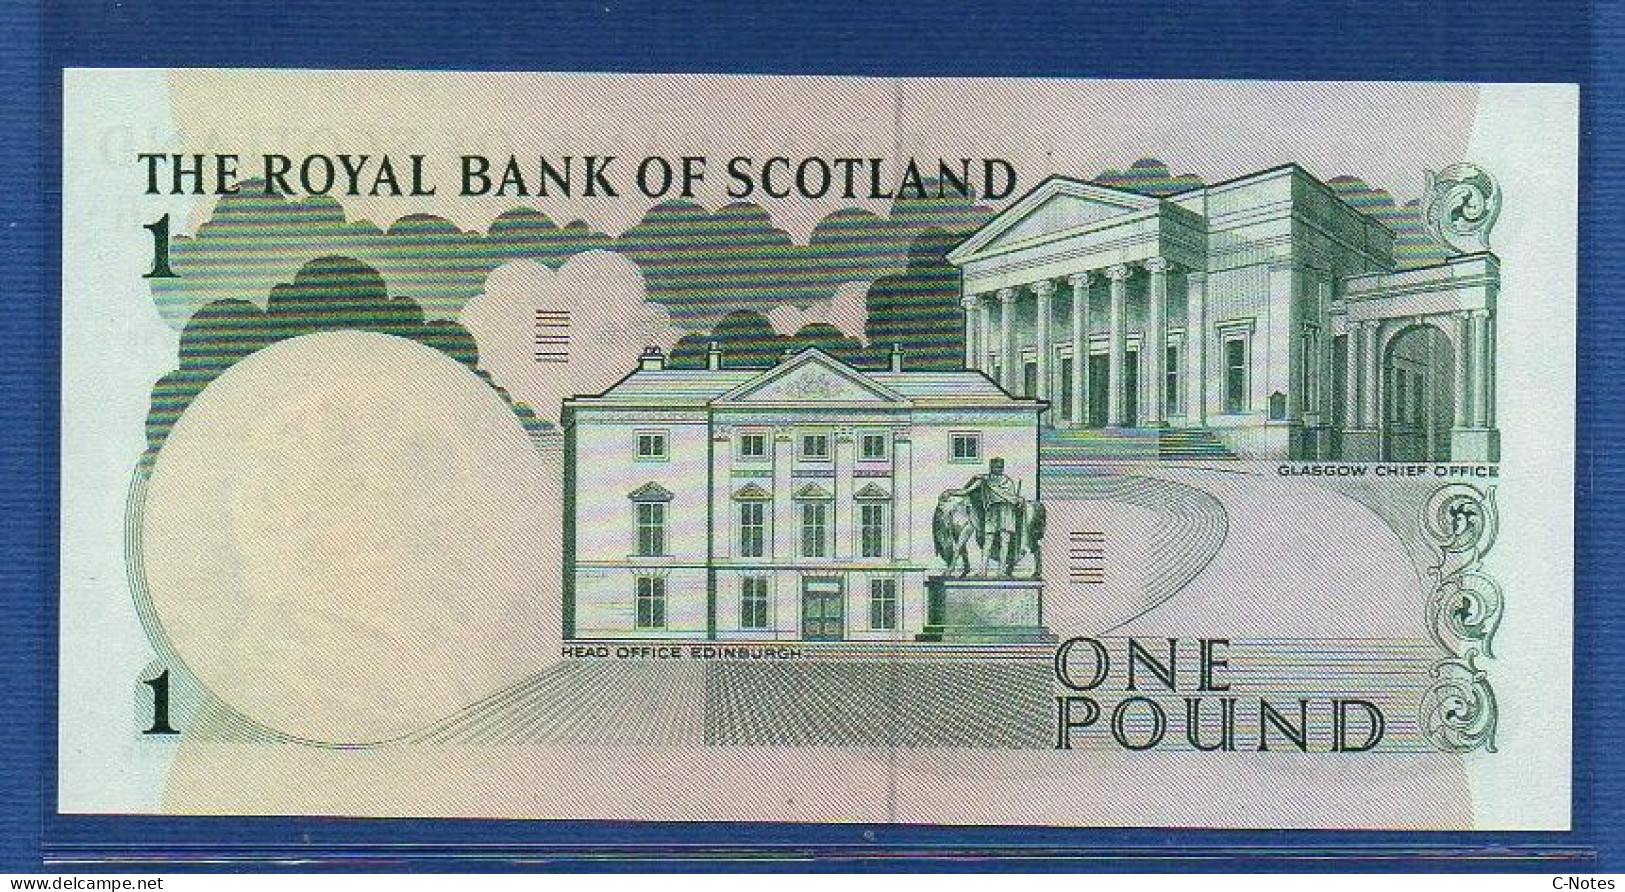 SCOTLAND - P.327 – 1 POUND 1967 UNC, S/n A/17 589556  "David Dale" Issue - 1 Pound